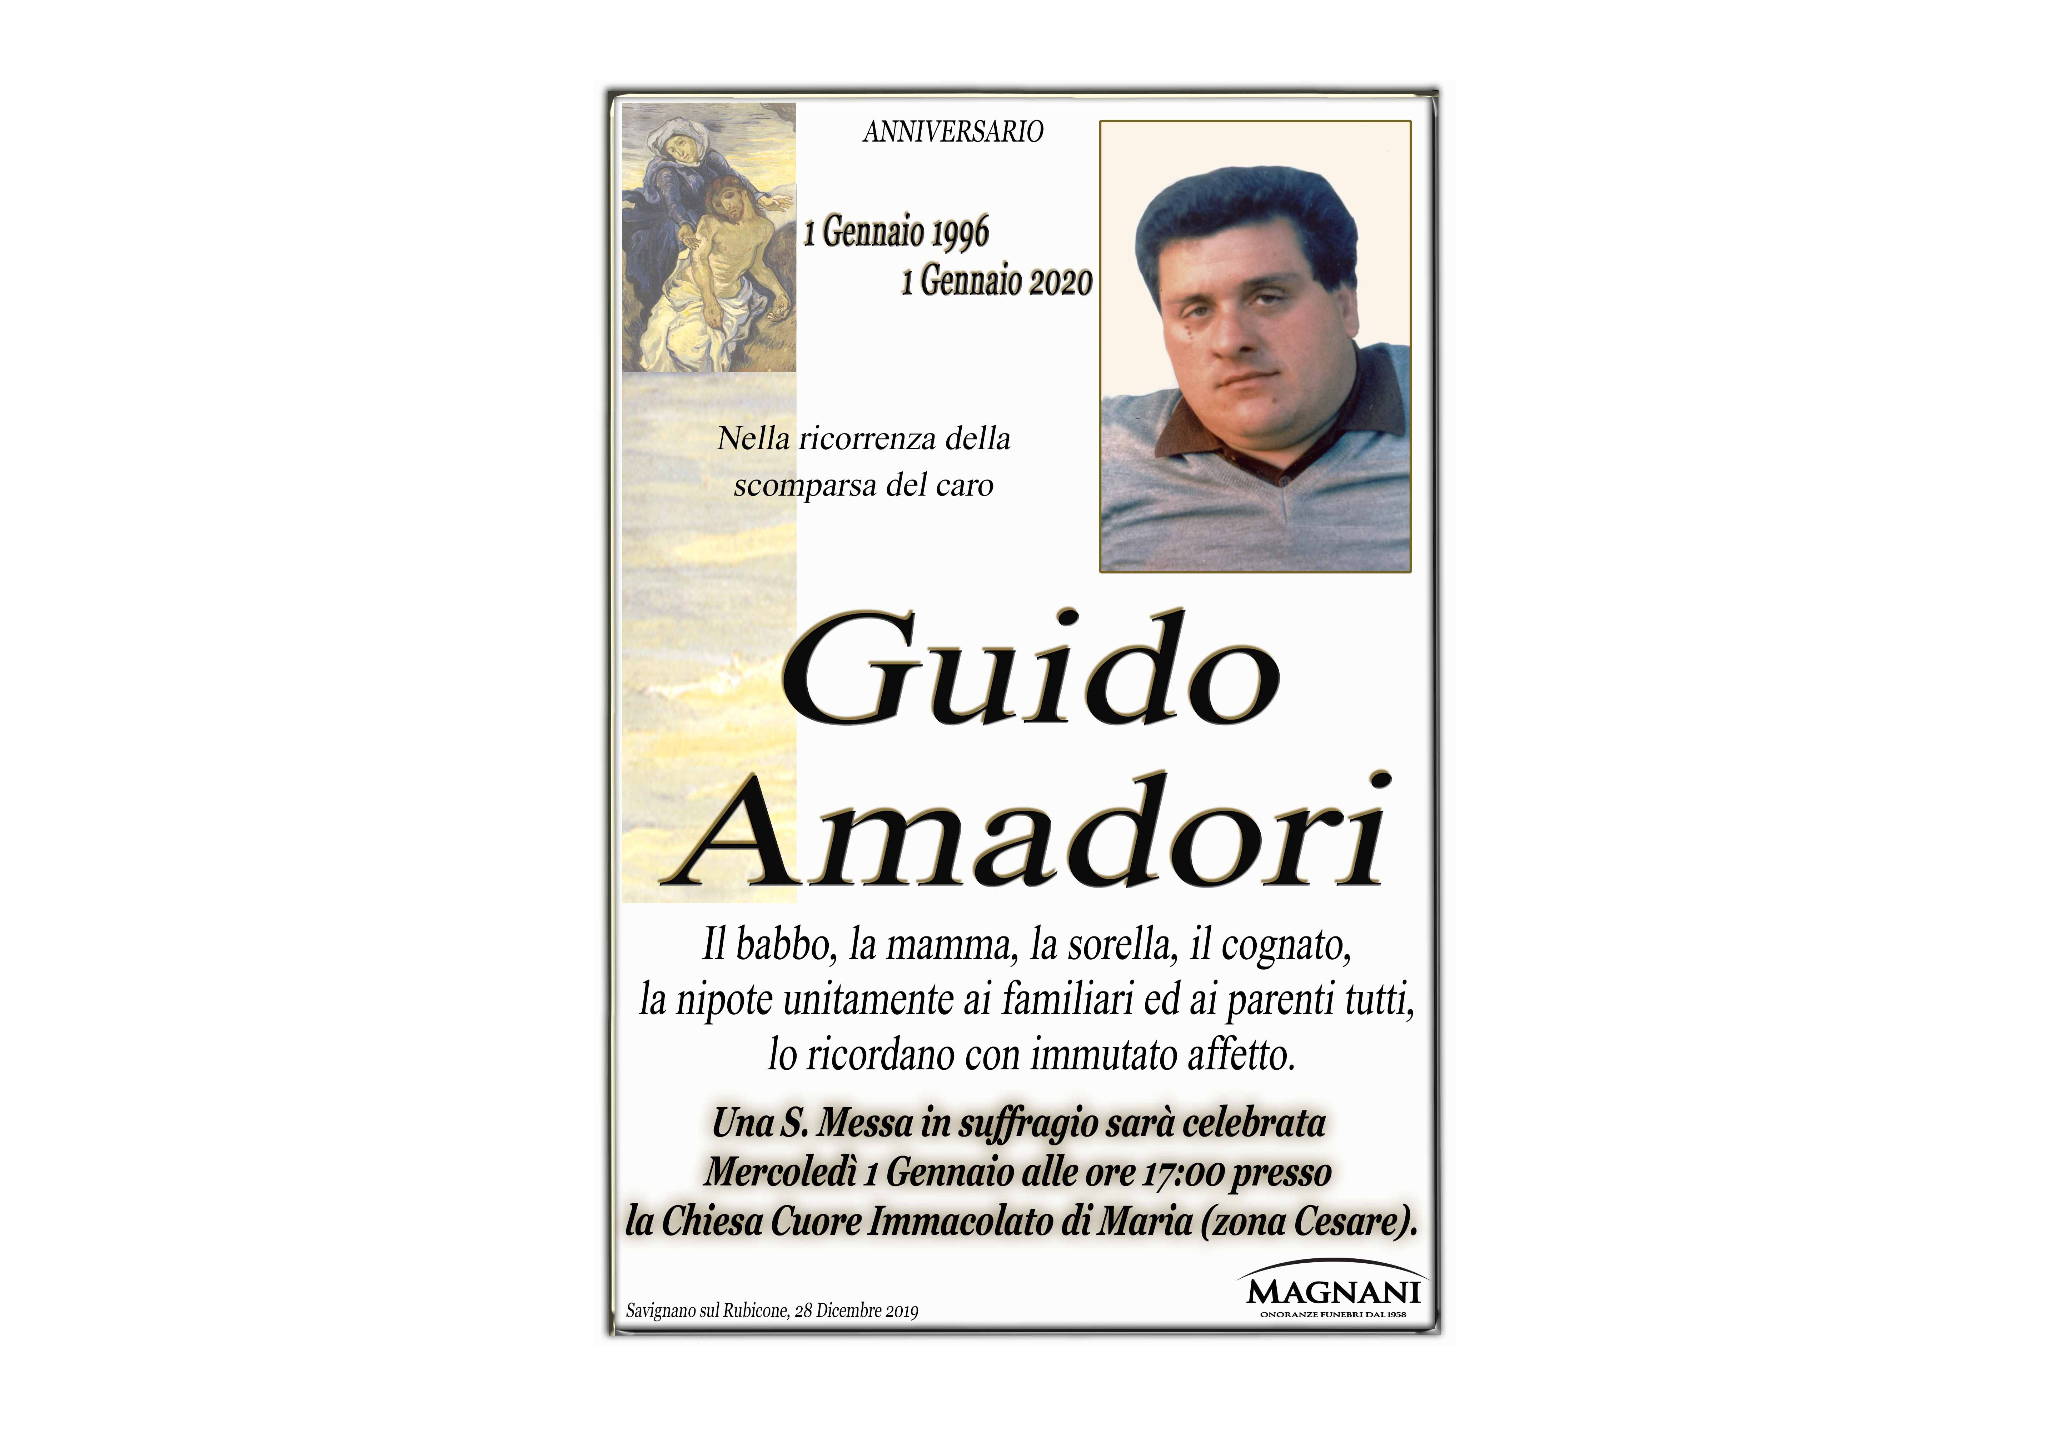 Guido Amadori